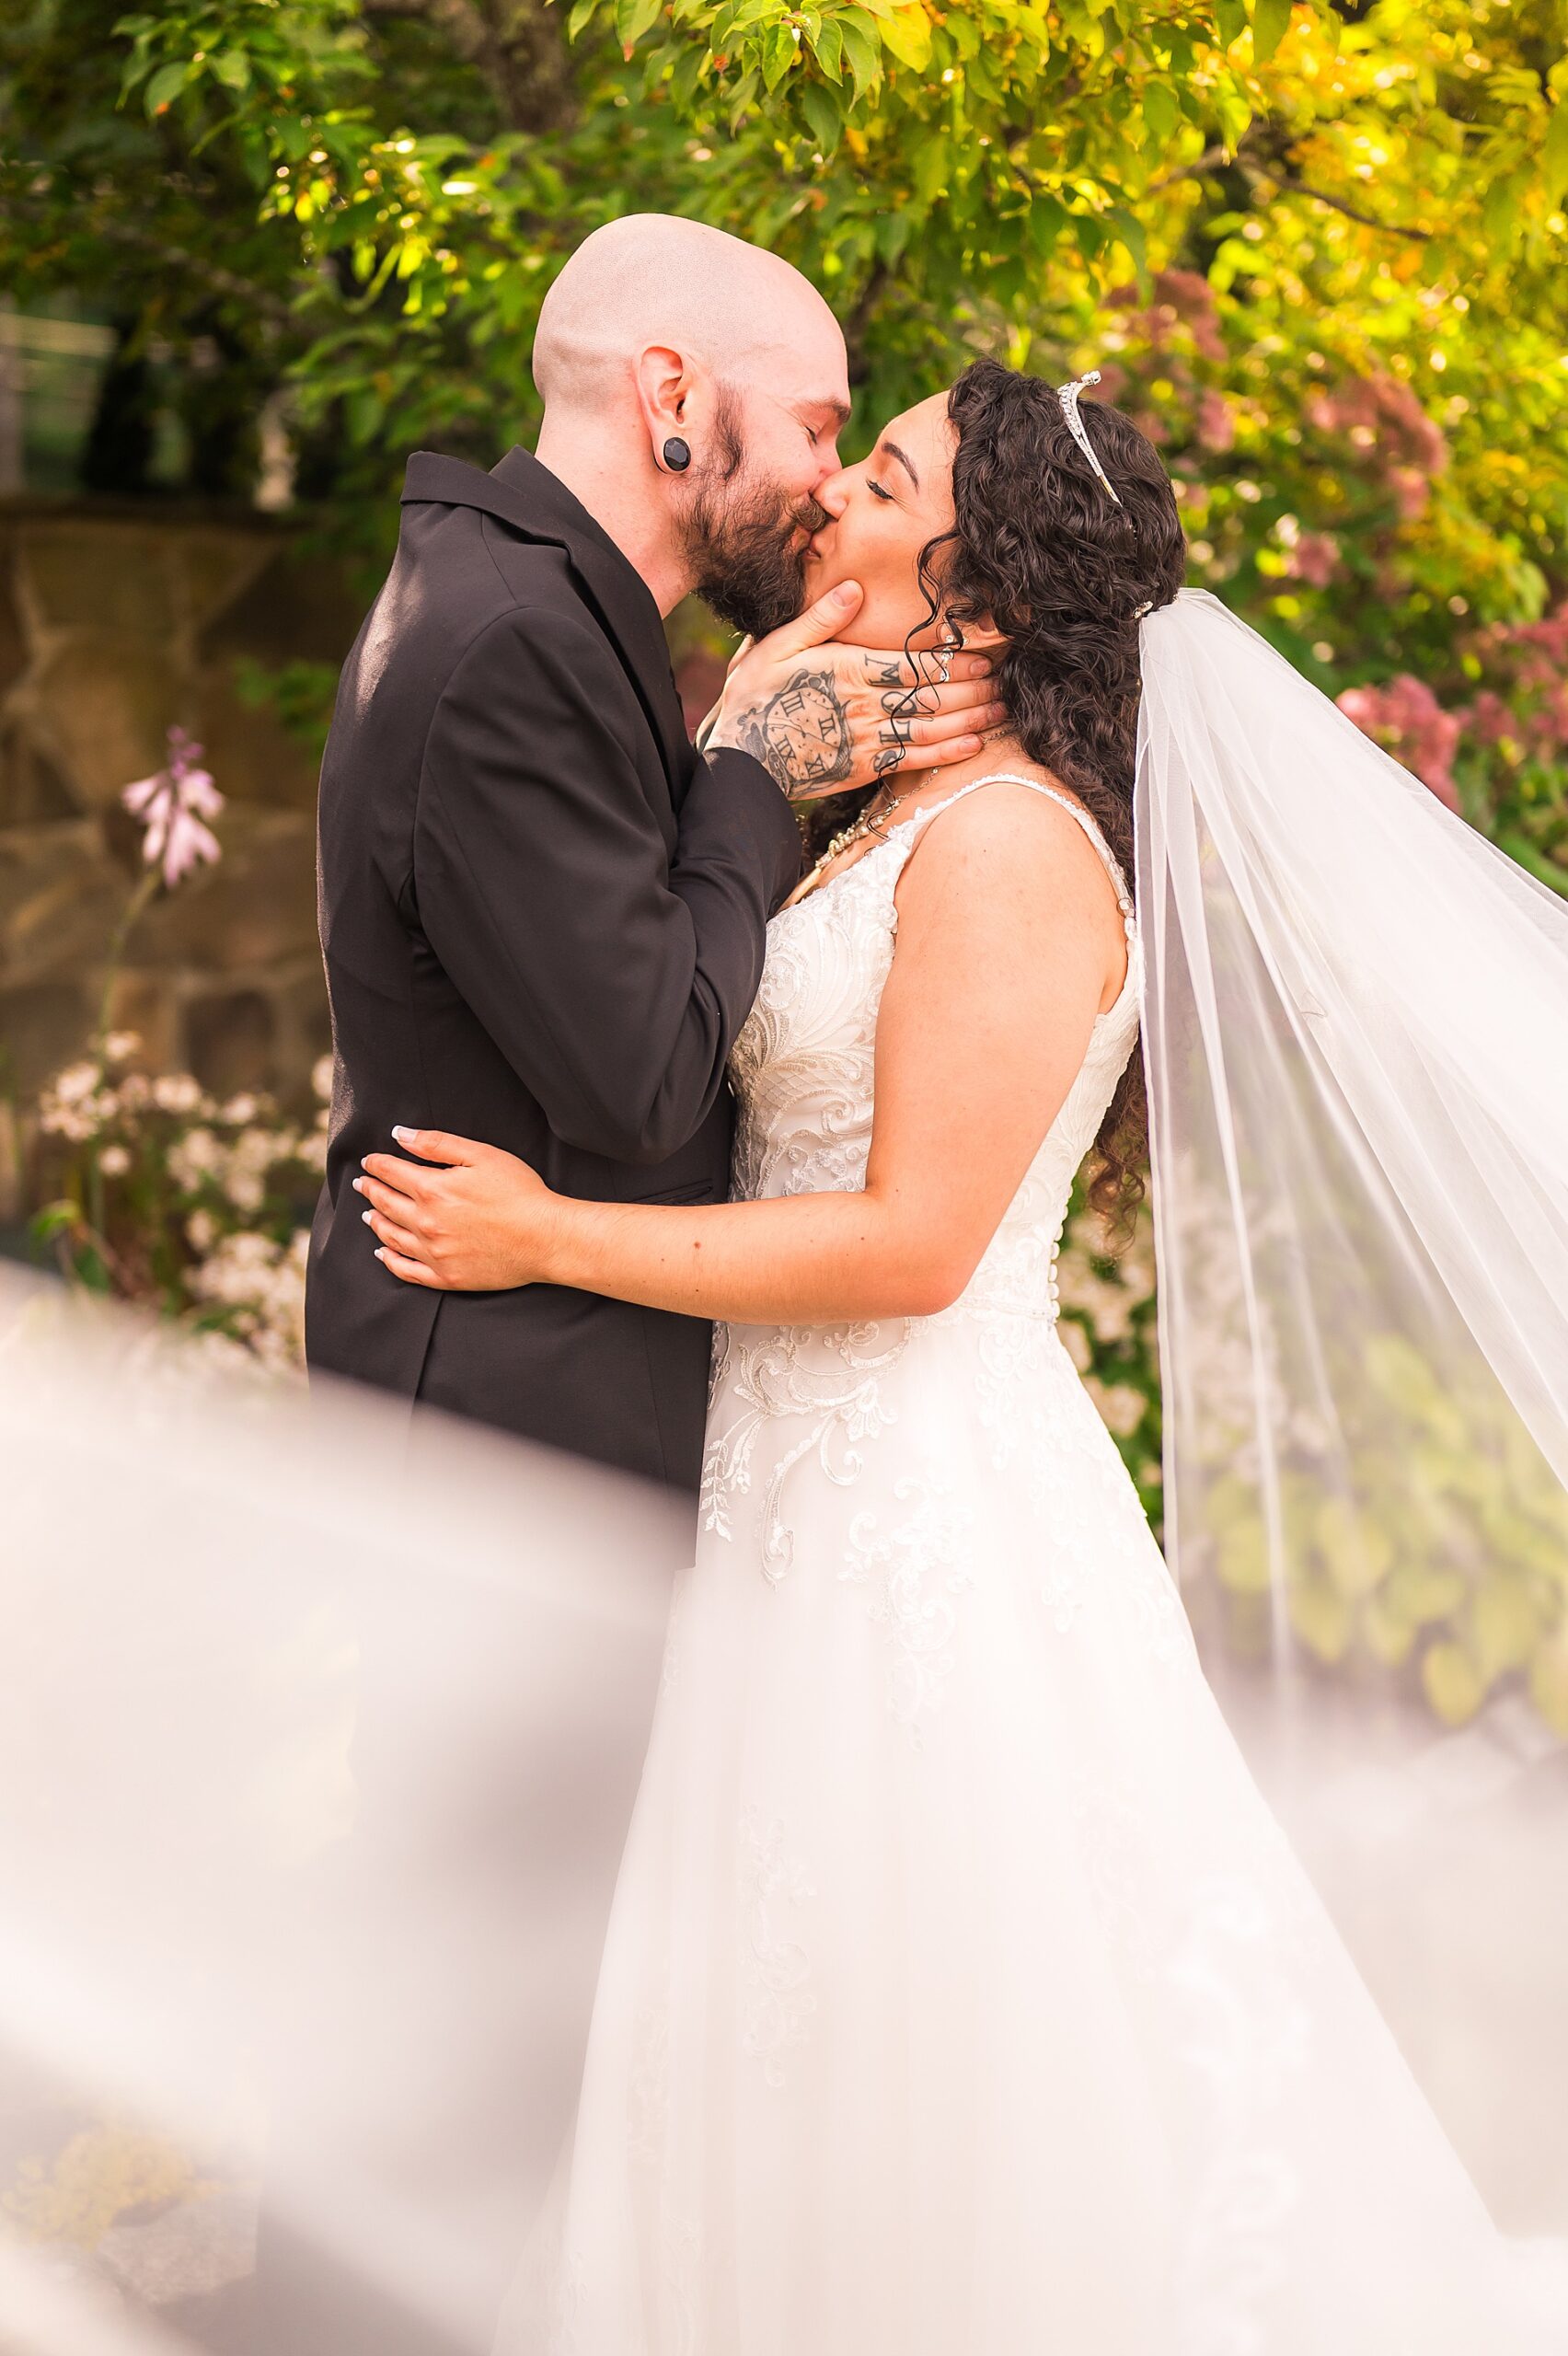 newlyweds kiss as bride's veil flows around them